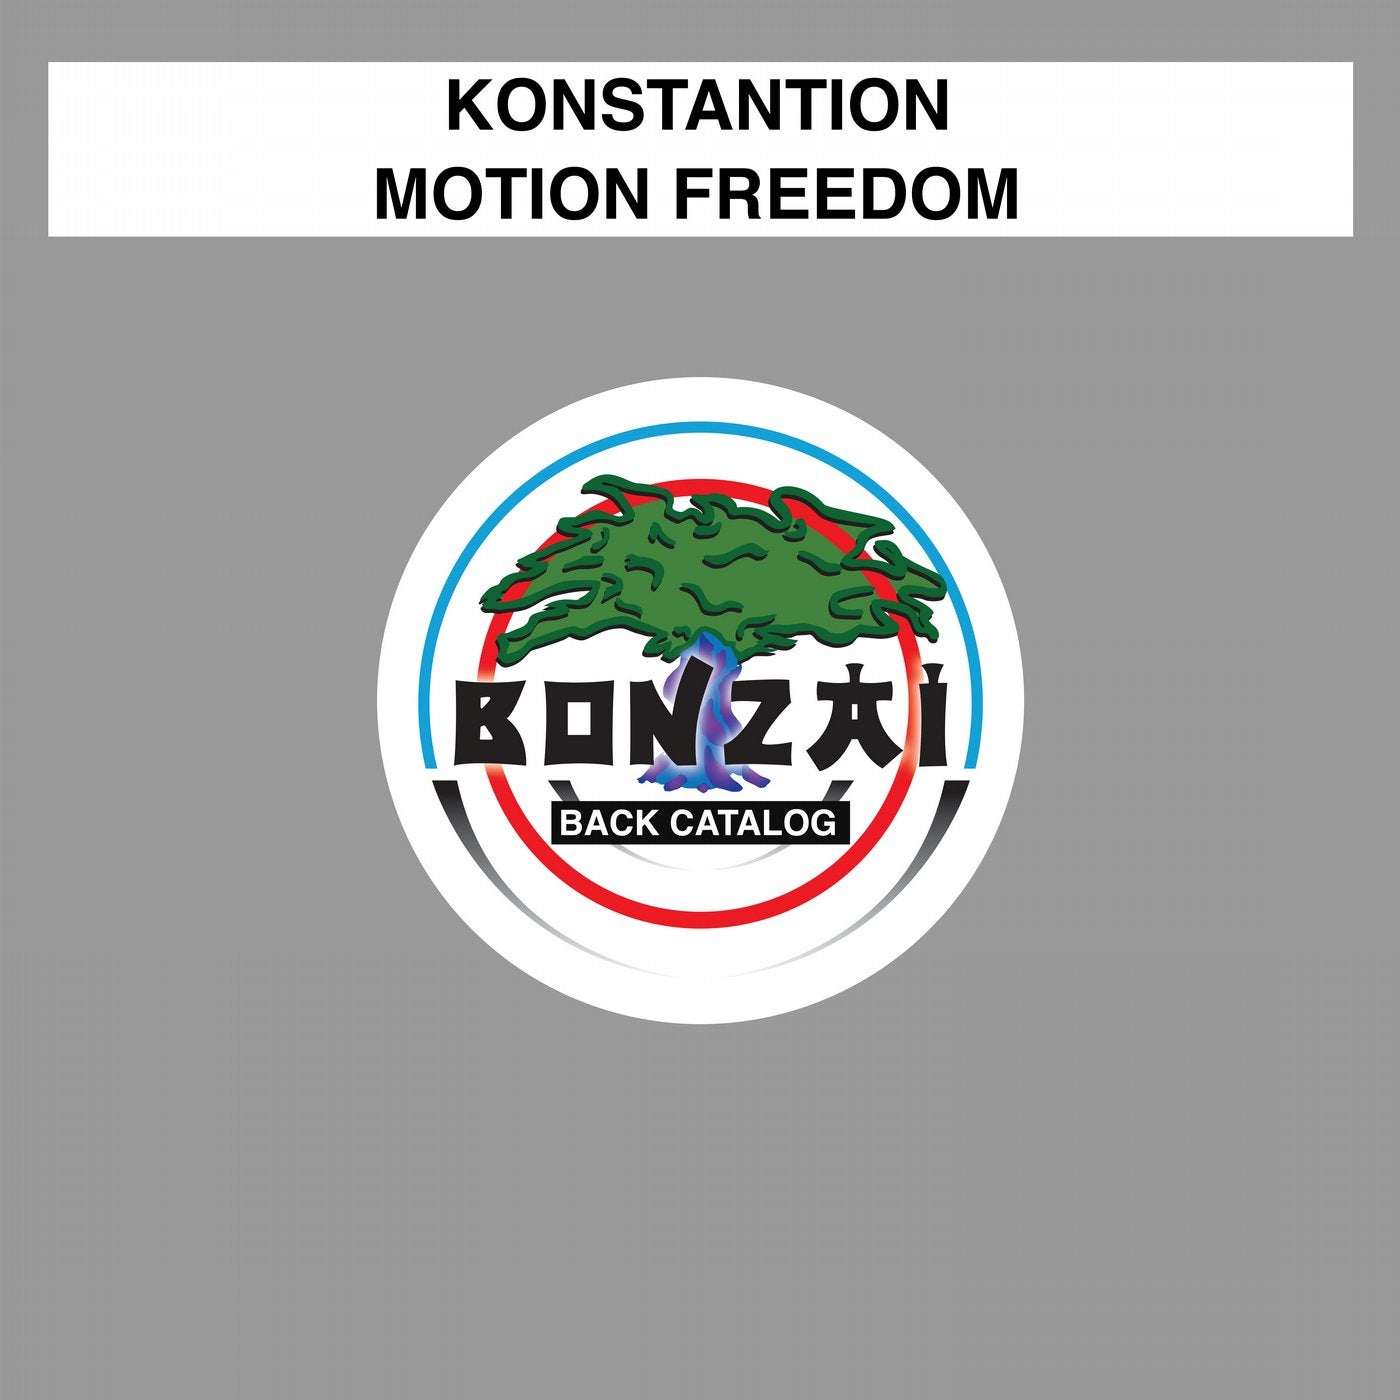 Motion Freedom